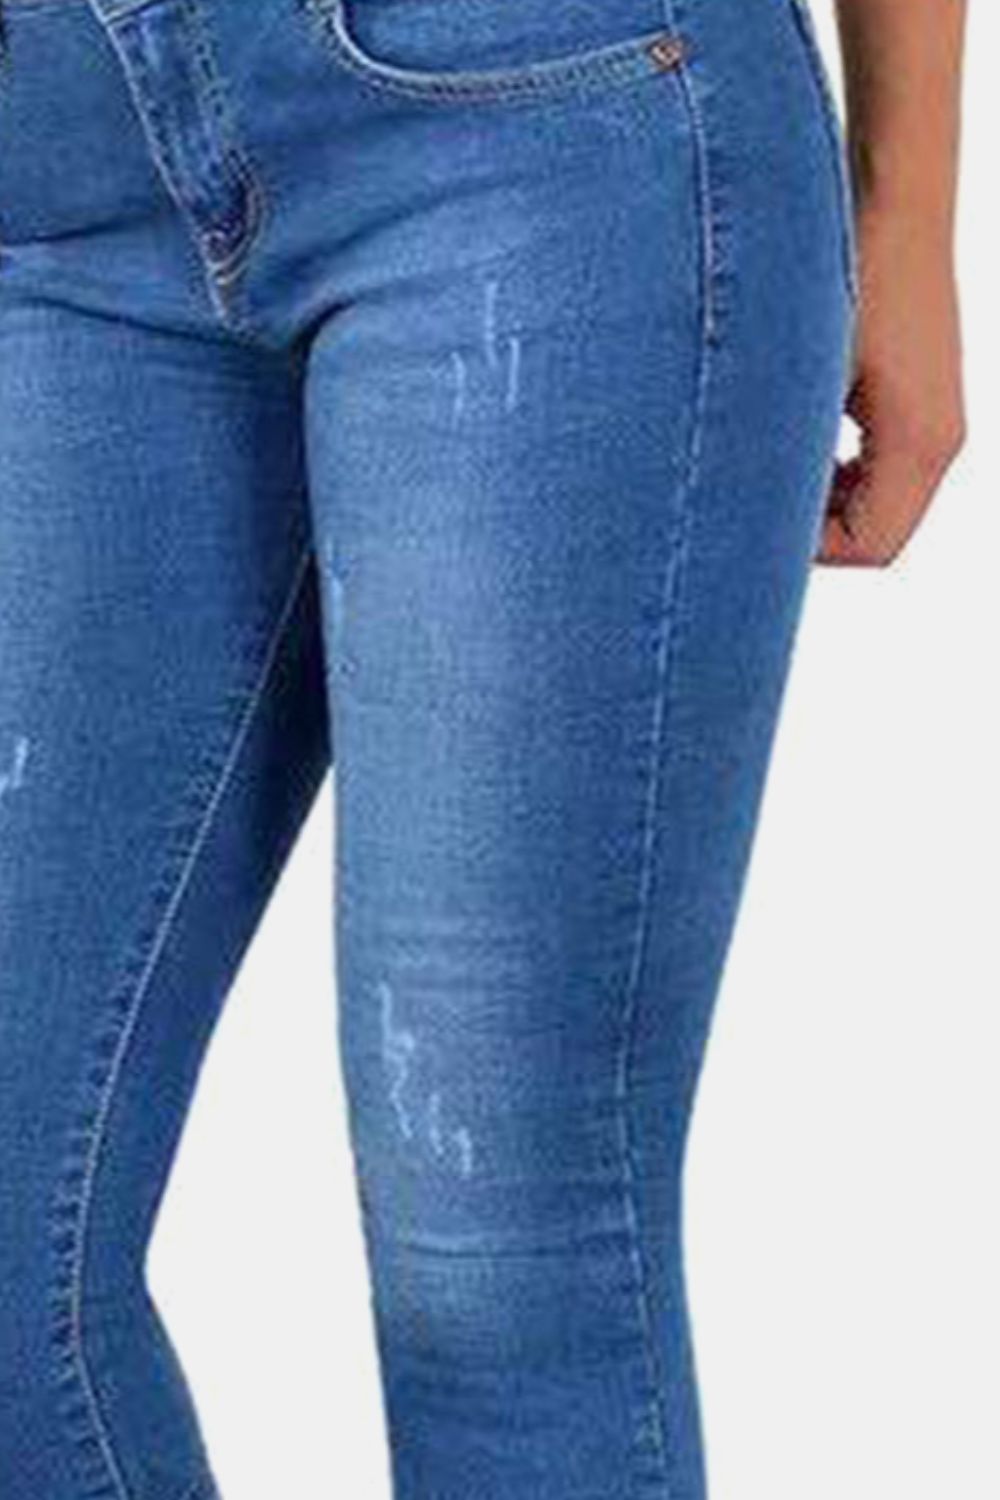 KHD Full Size Buttoned Capris Jeans  Krazy Heart Designs Boutique   